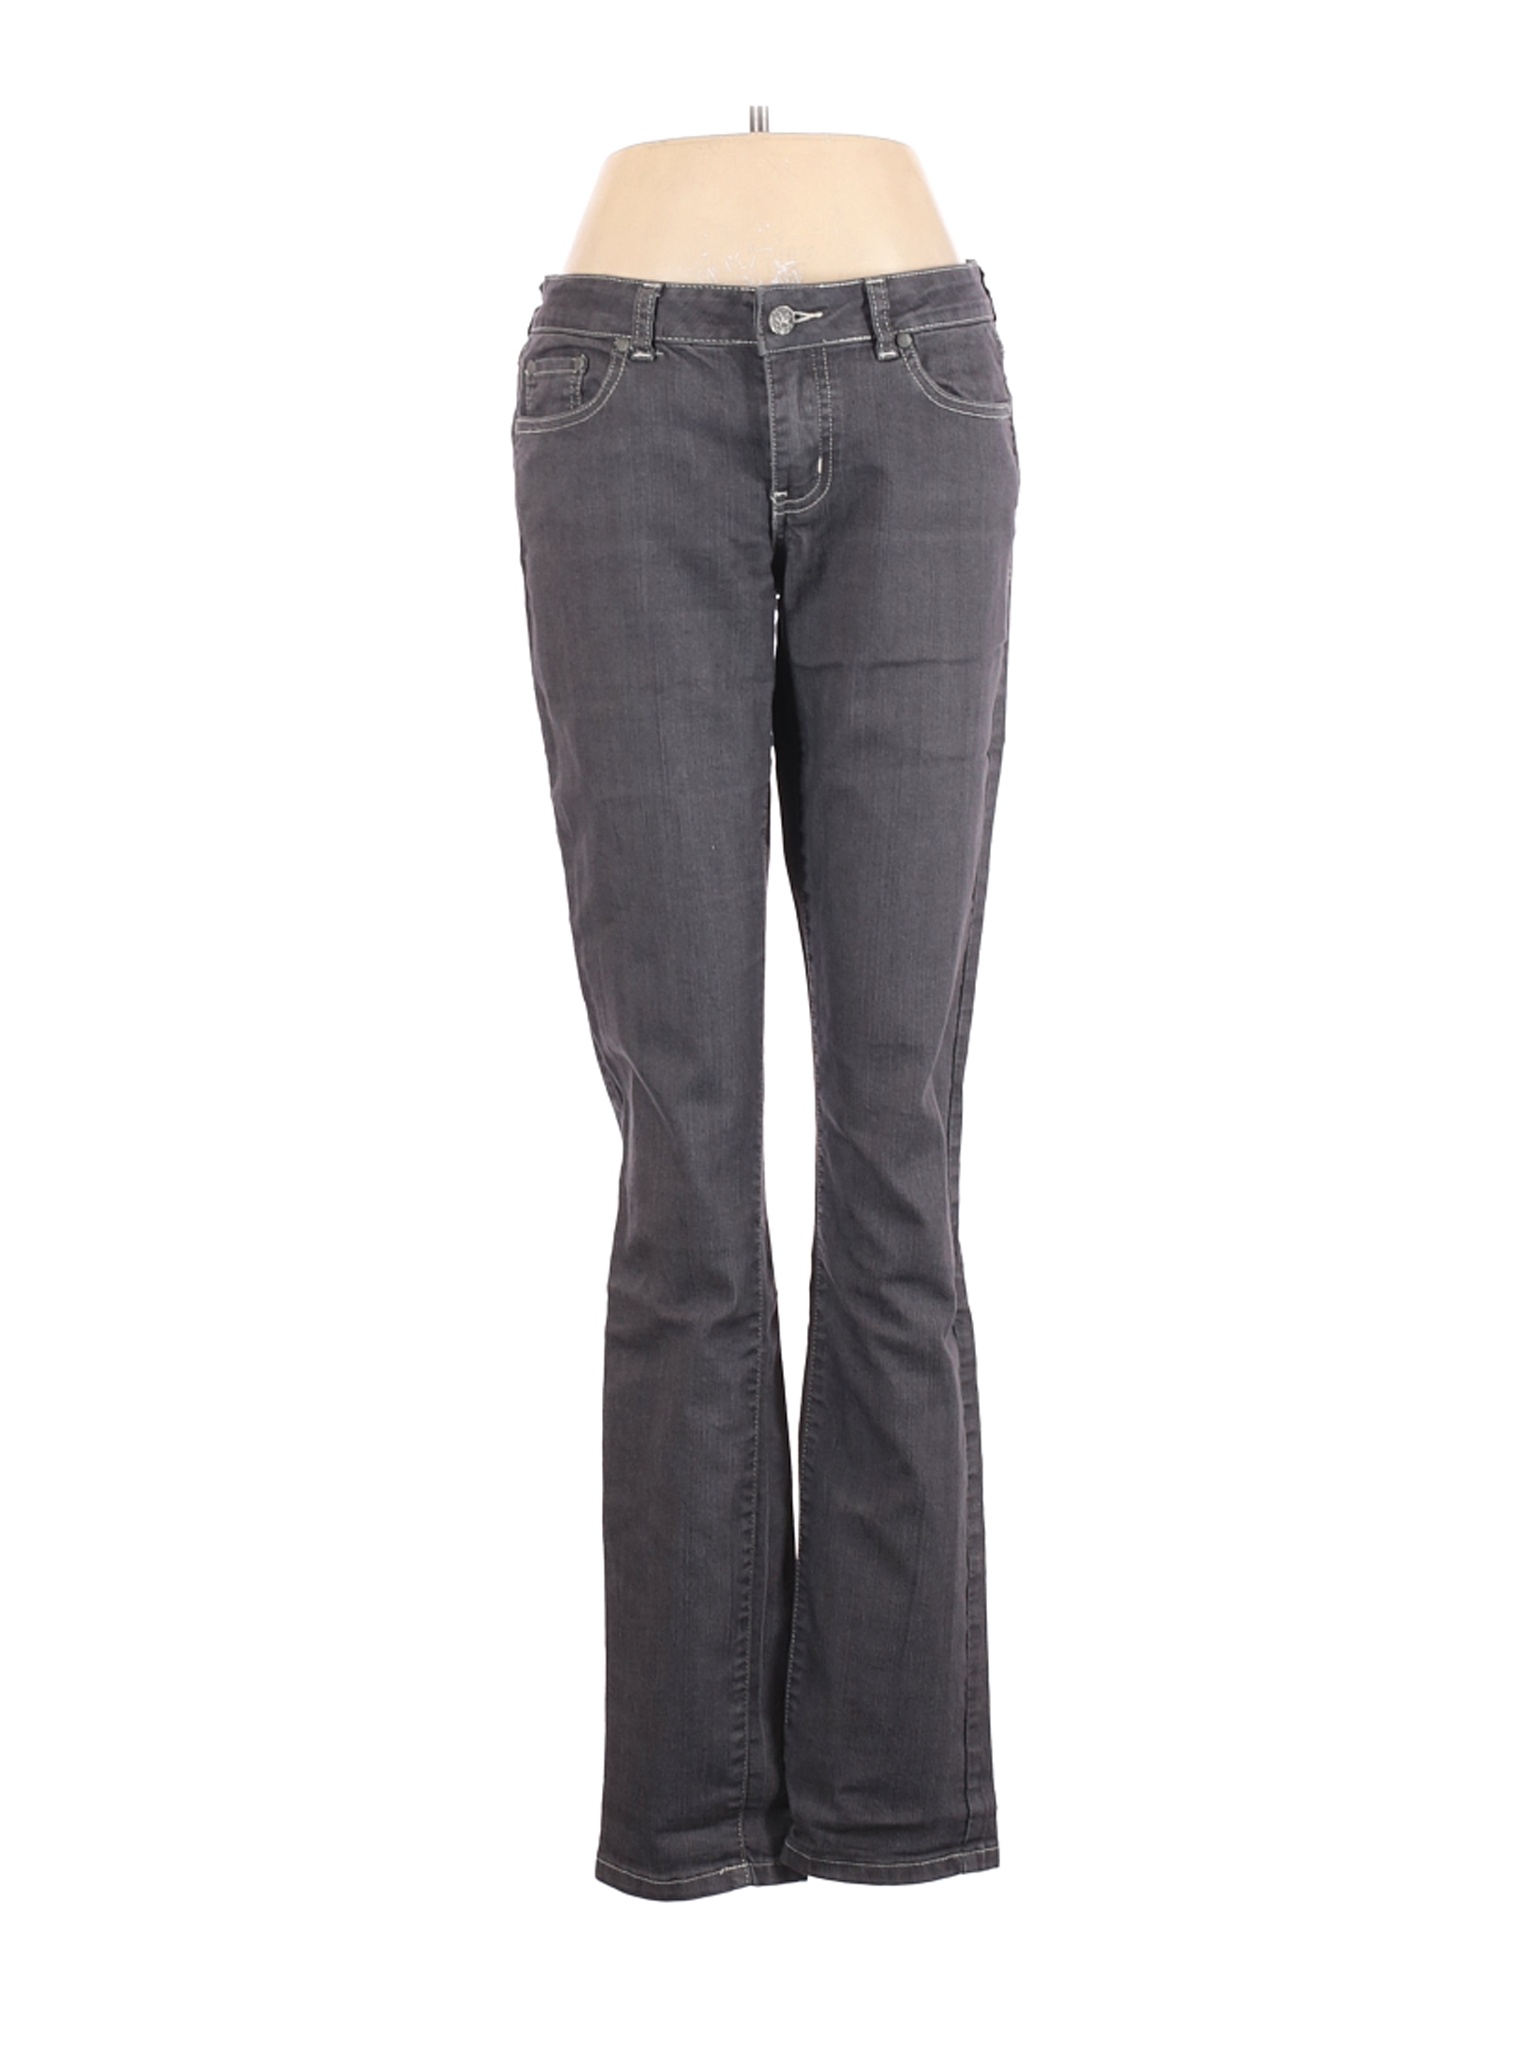 PrAna Women Gray Jeans 6 | eBay